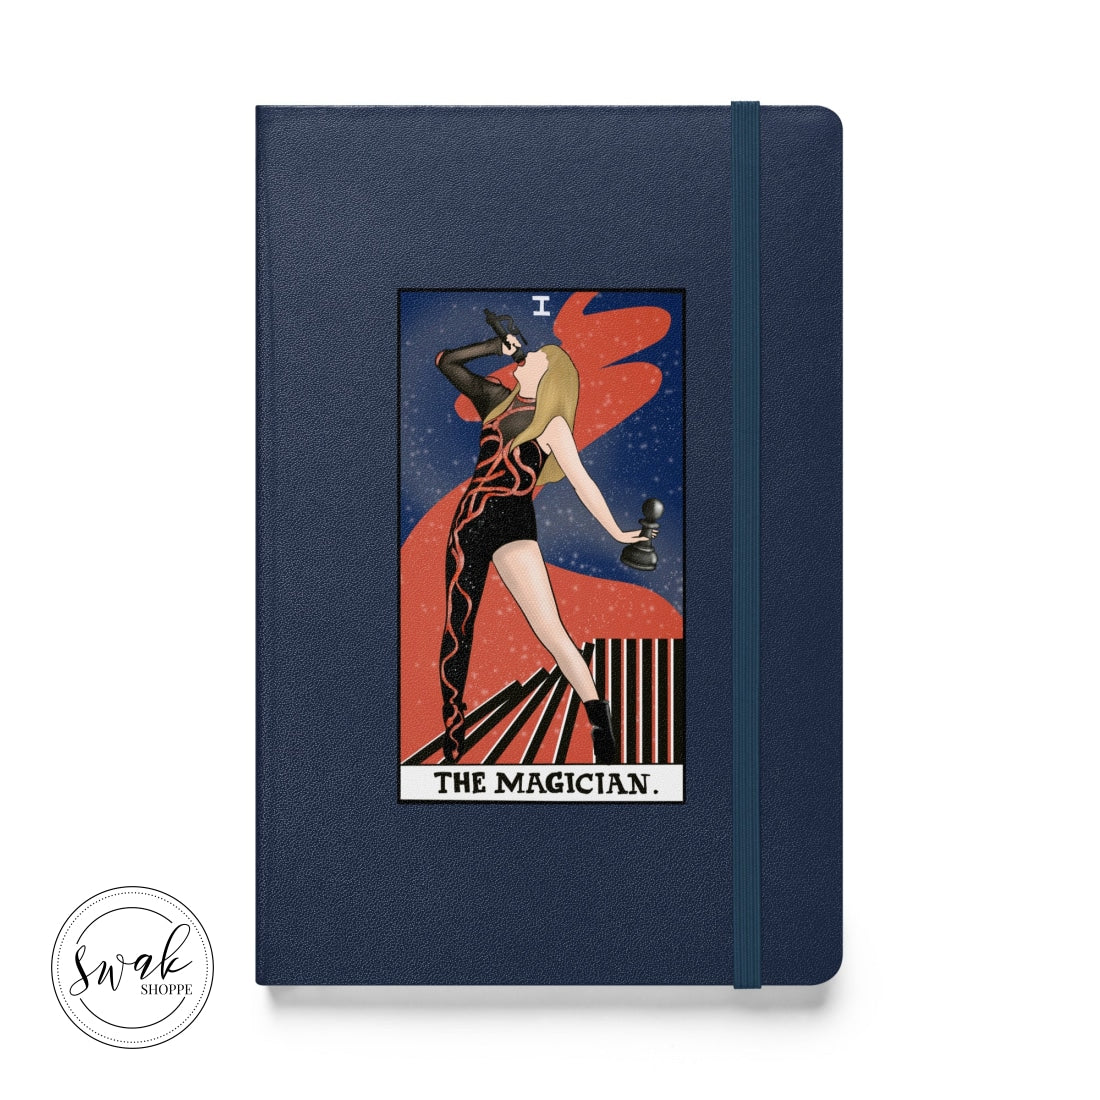 Taylor + Tarot The Magician Hardcover Bound Notebook Navy